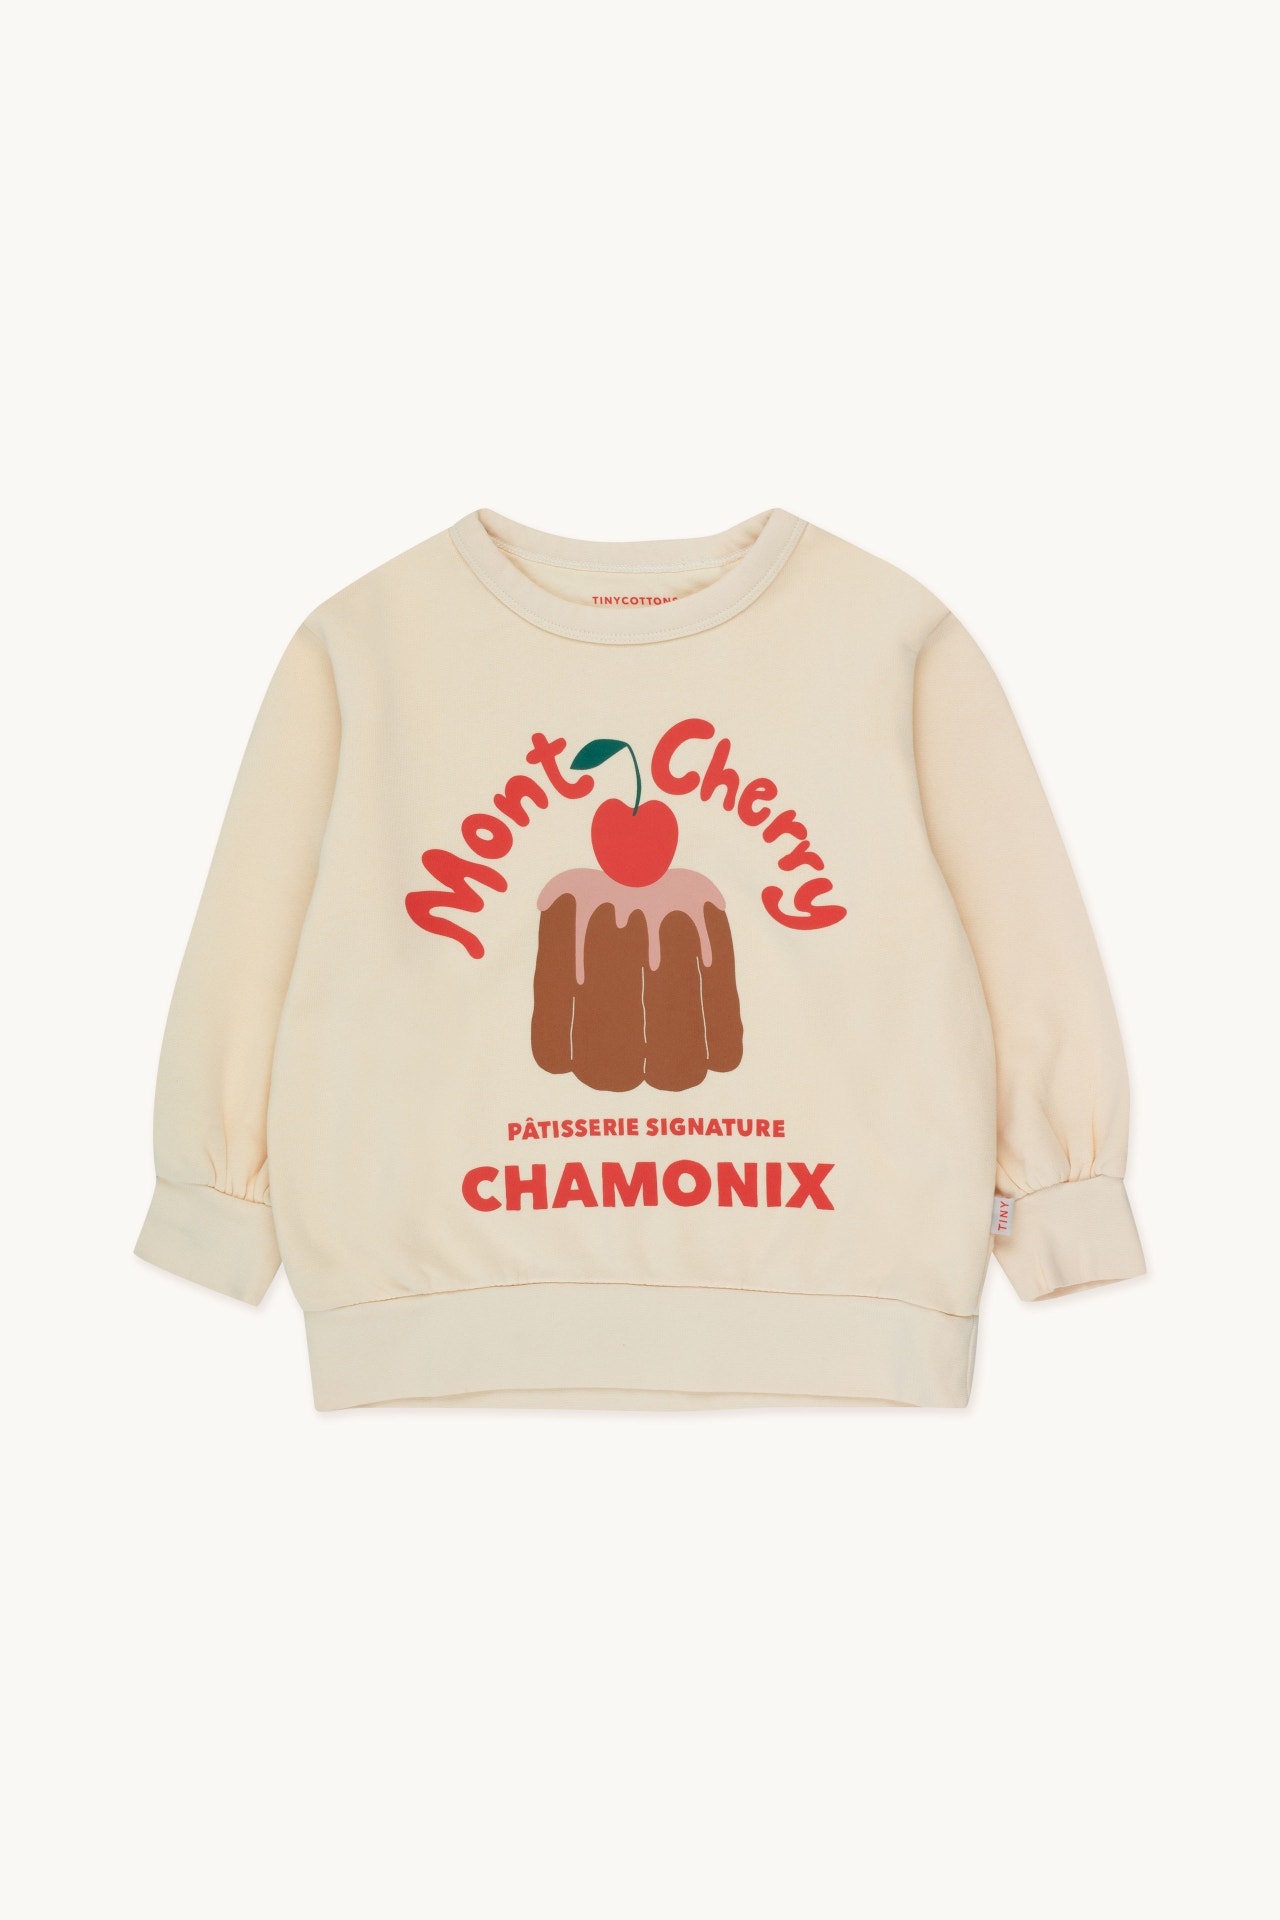 Mont herry Sweatshirt - Unicorn Kids Boutique